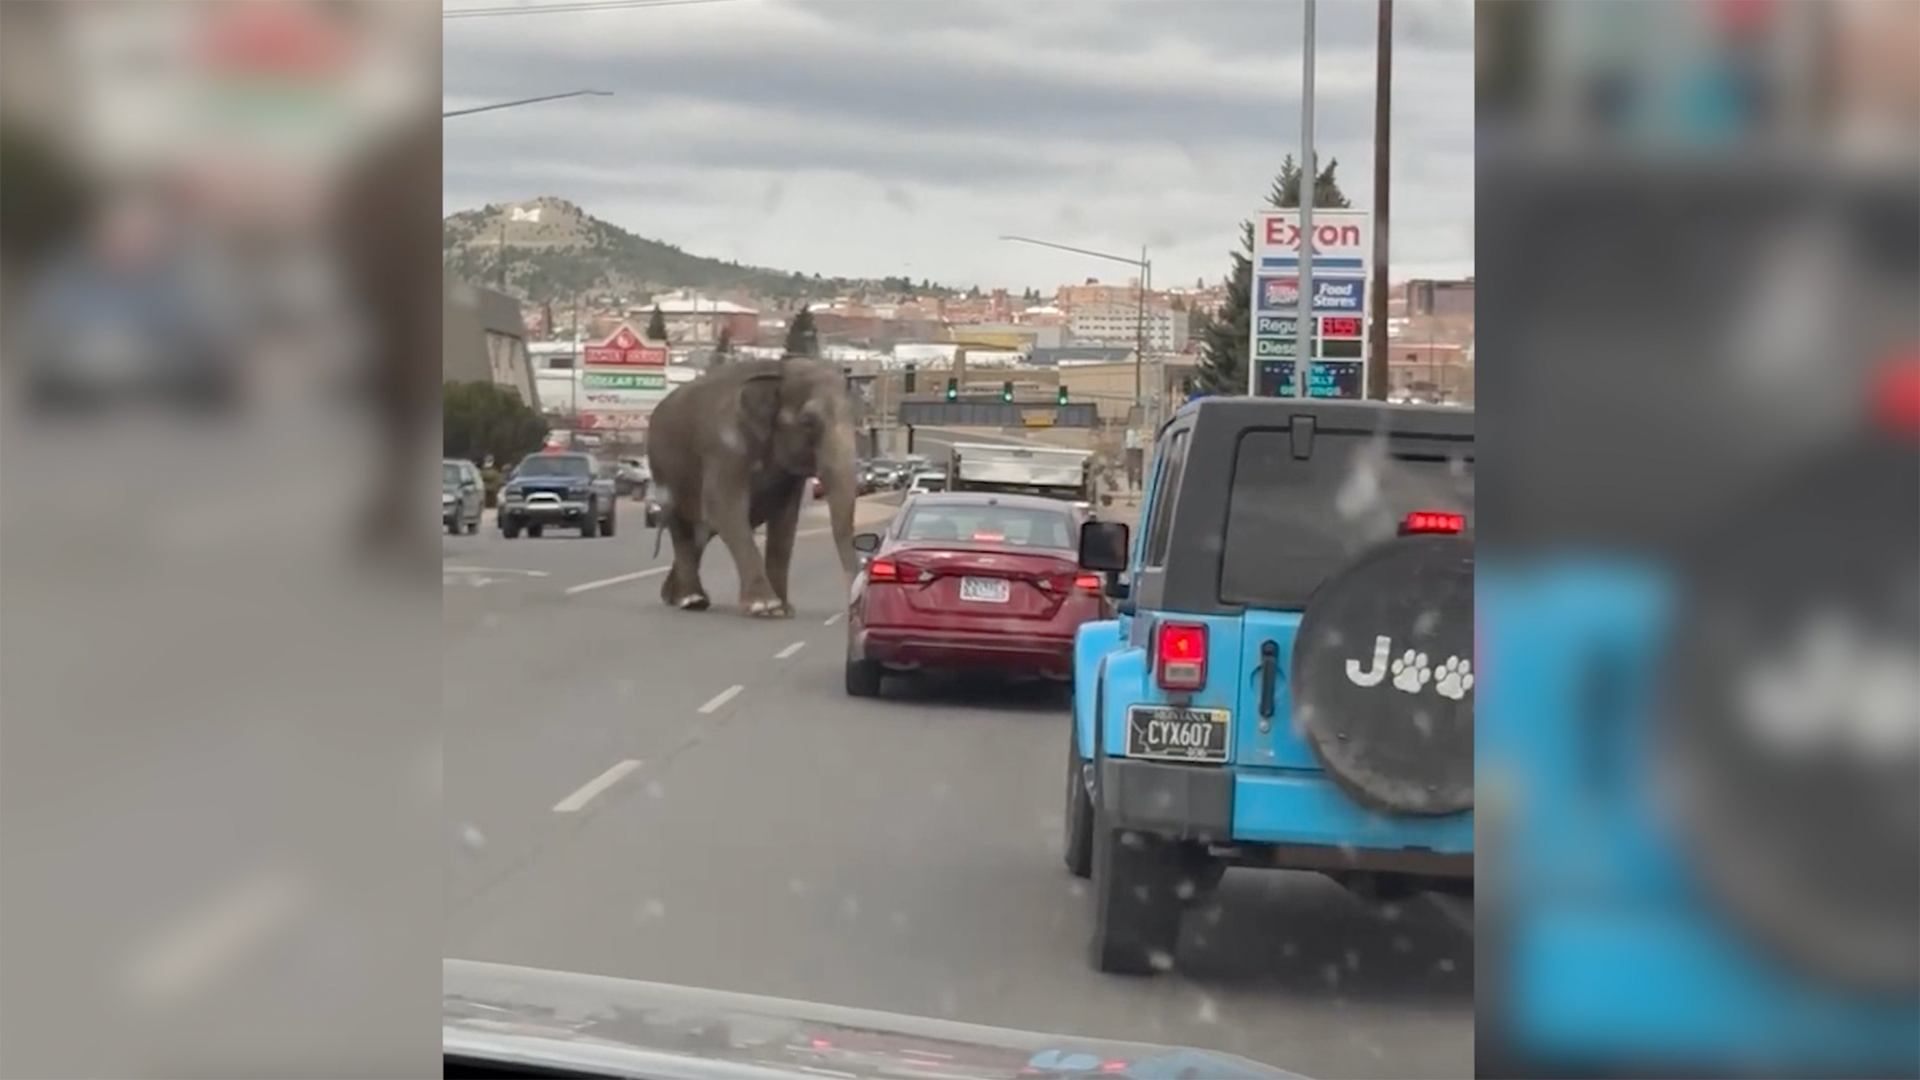 Elephant named Viola escapes circus, takes walk through Montana town